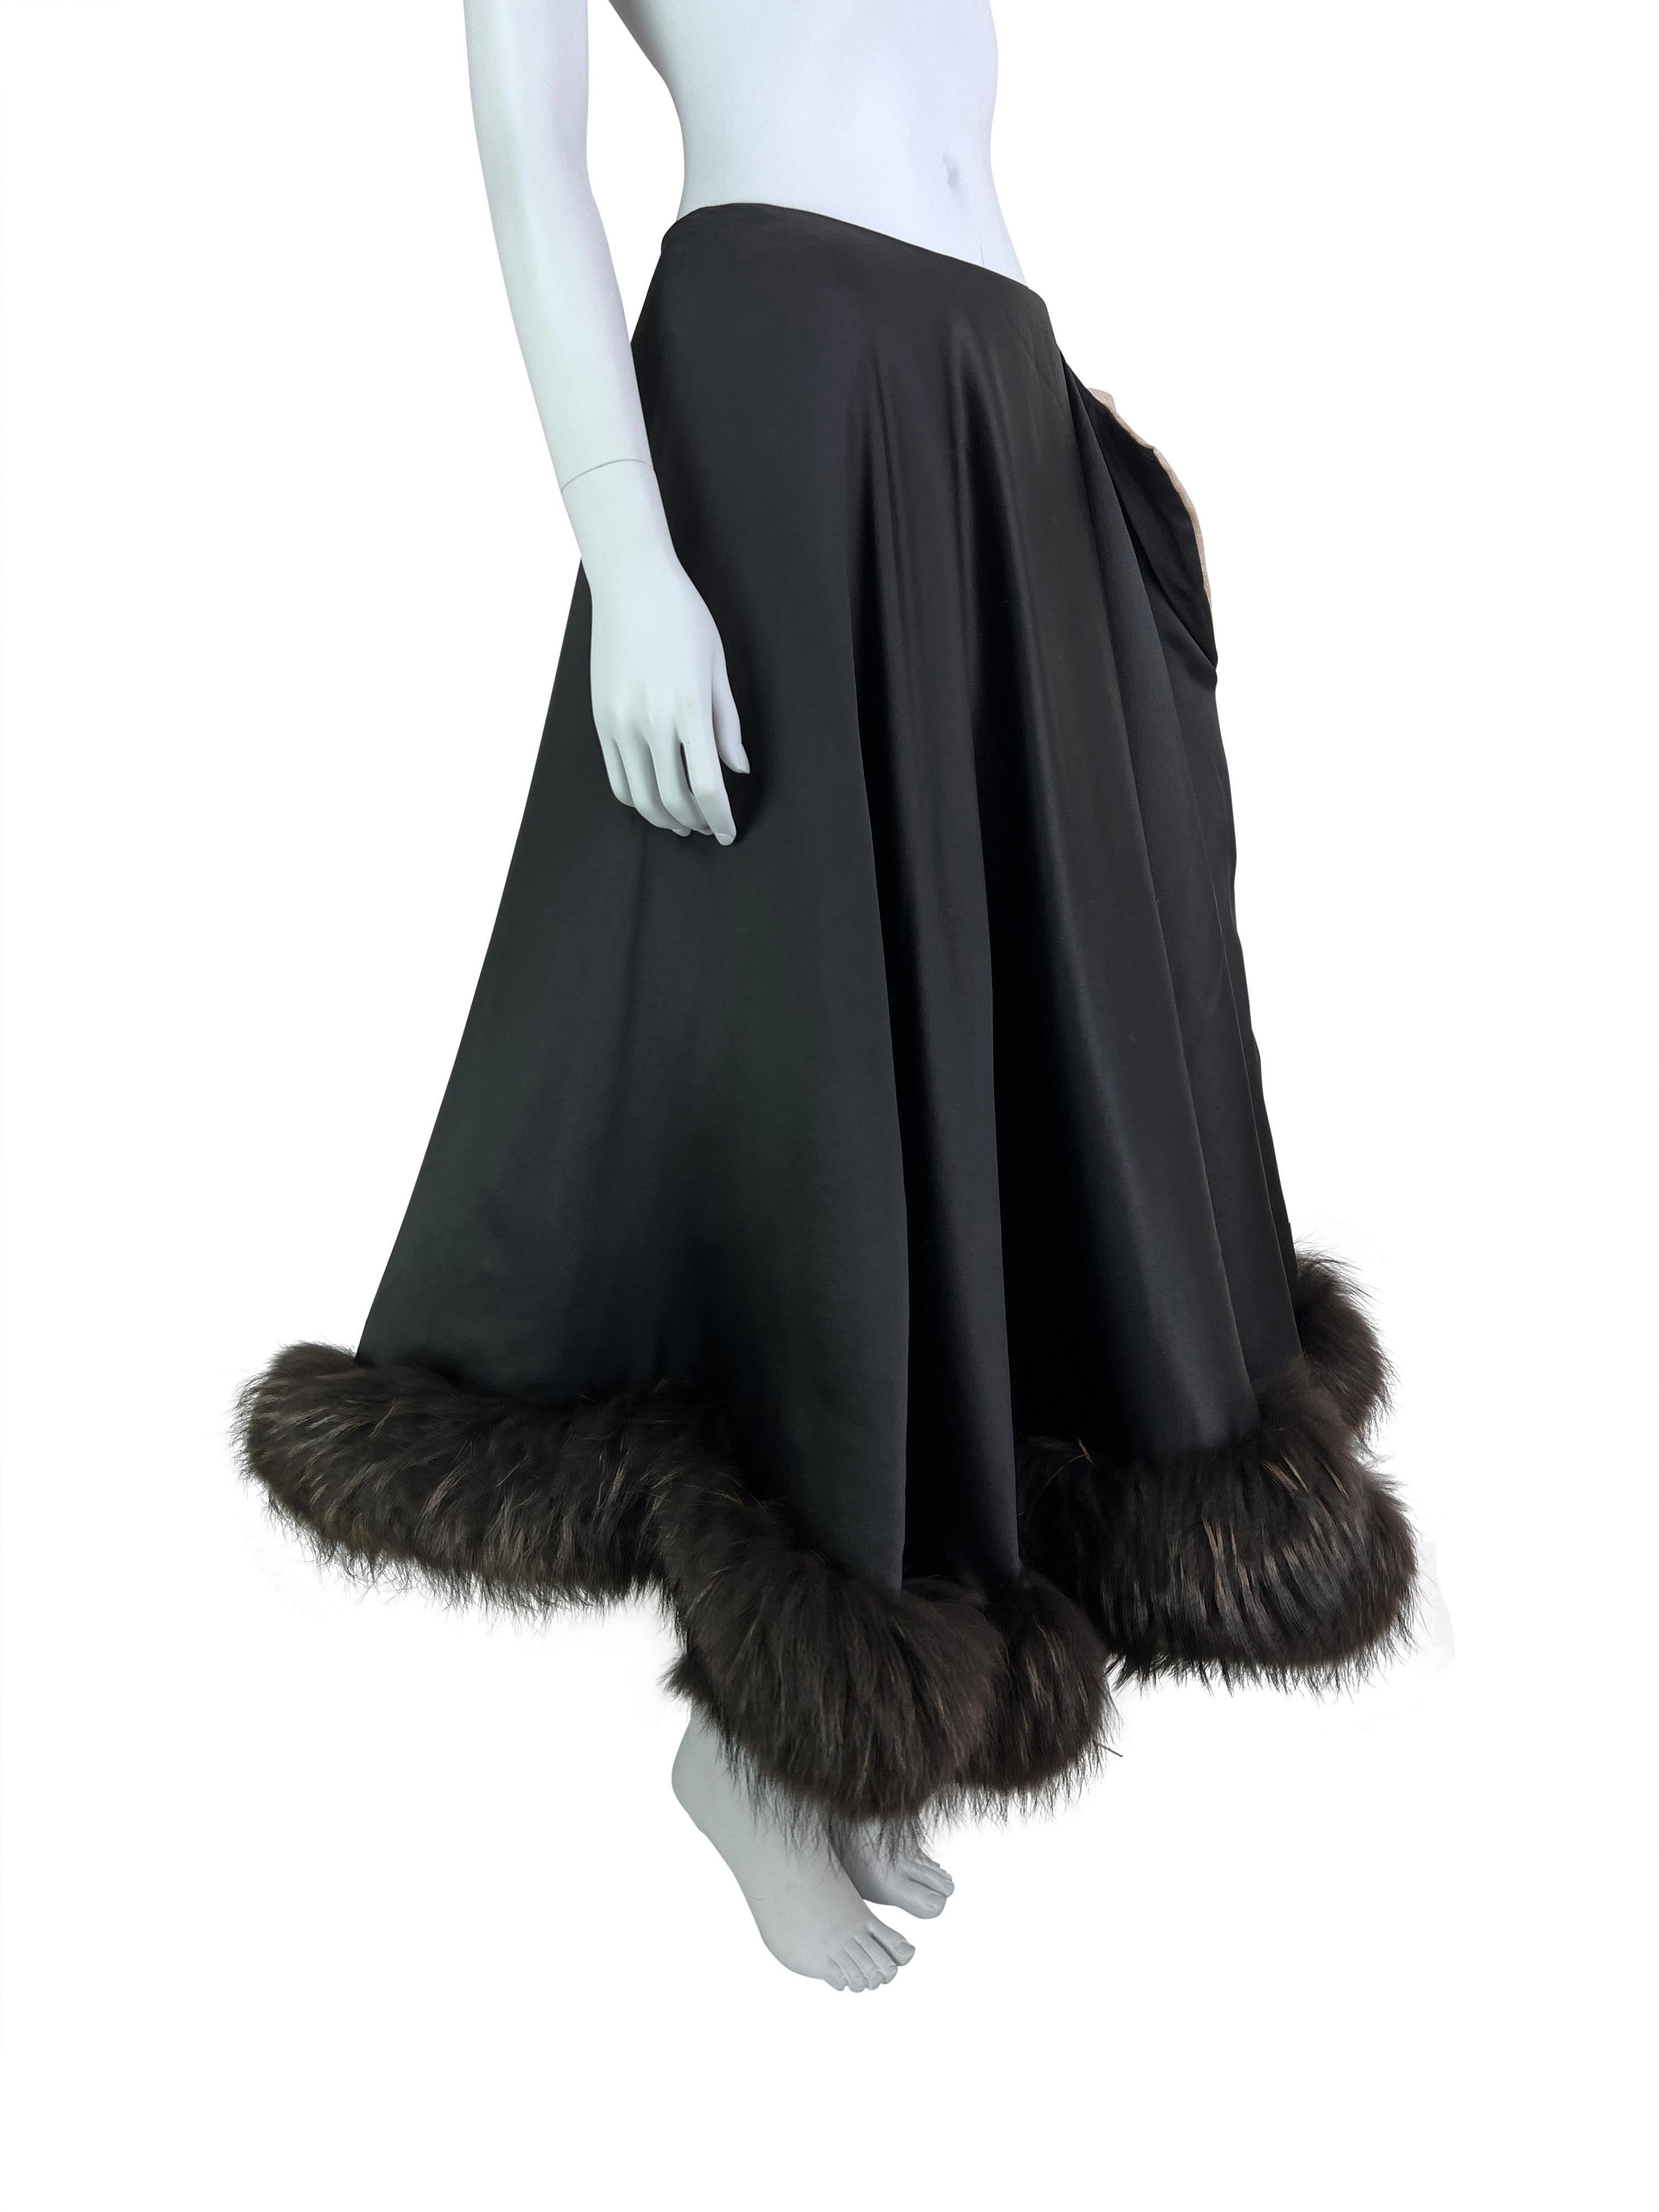 Yohji Yamamoto Fall 2000 Padded Silk Skirt With Fur Trim 8